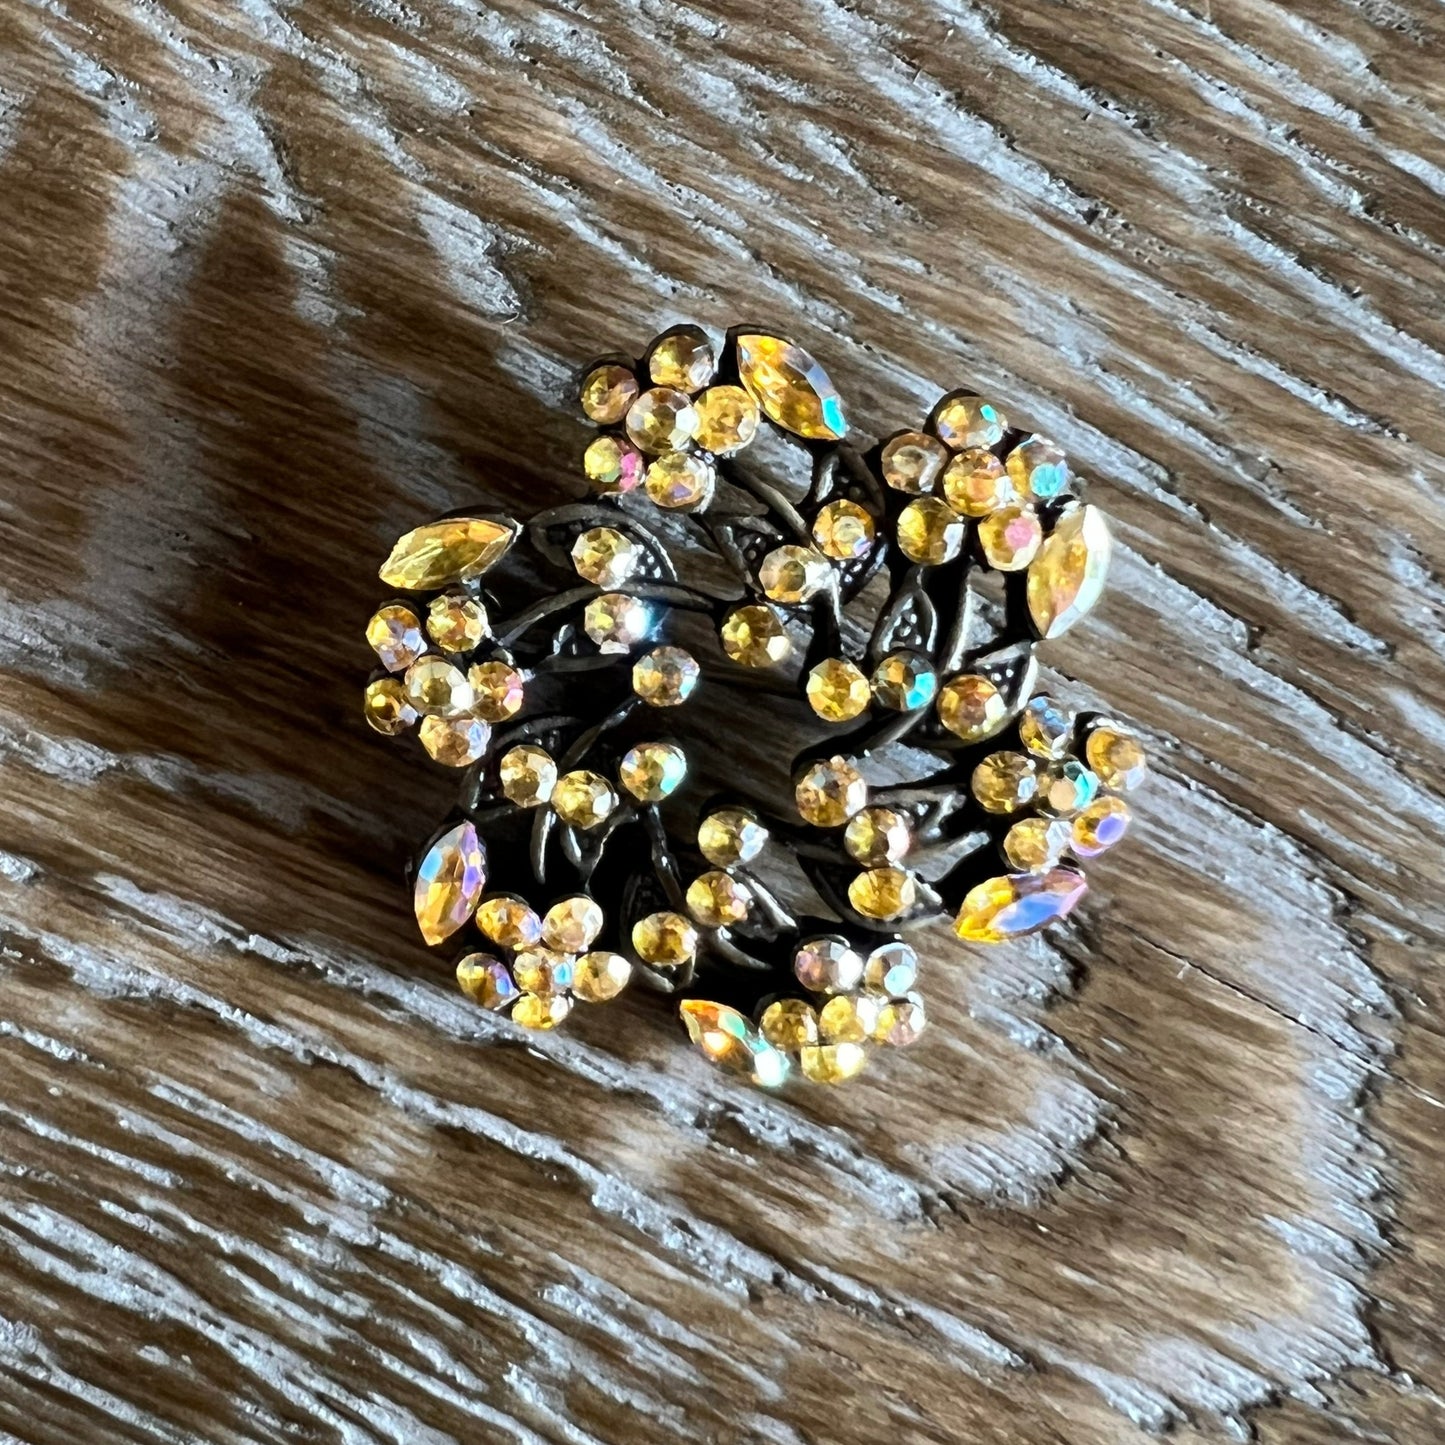 Antique Gold Flower Brooch